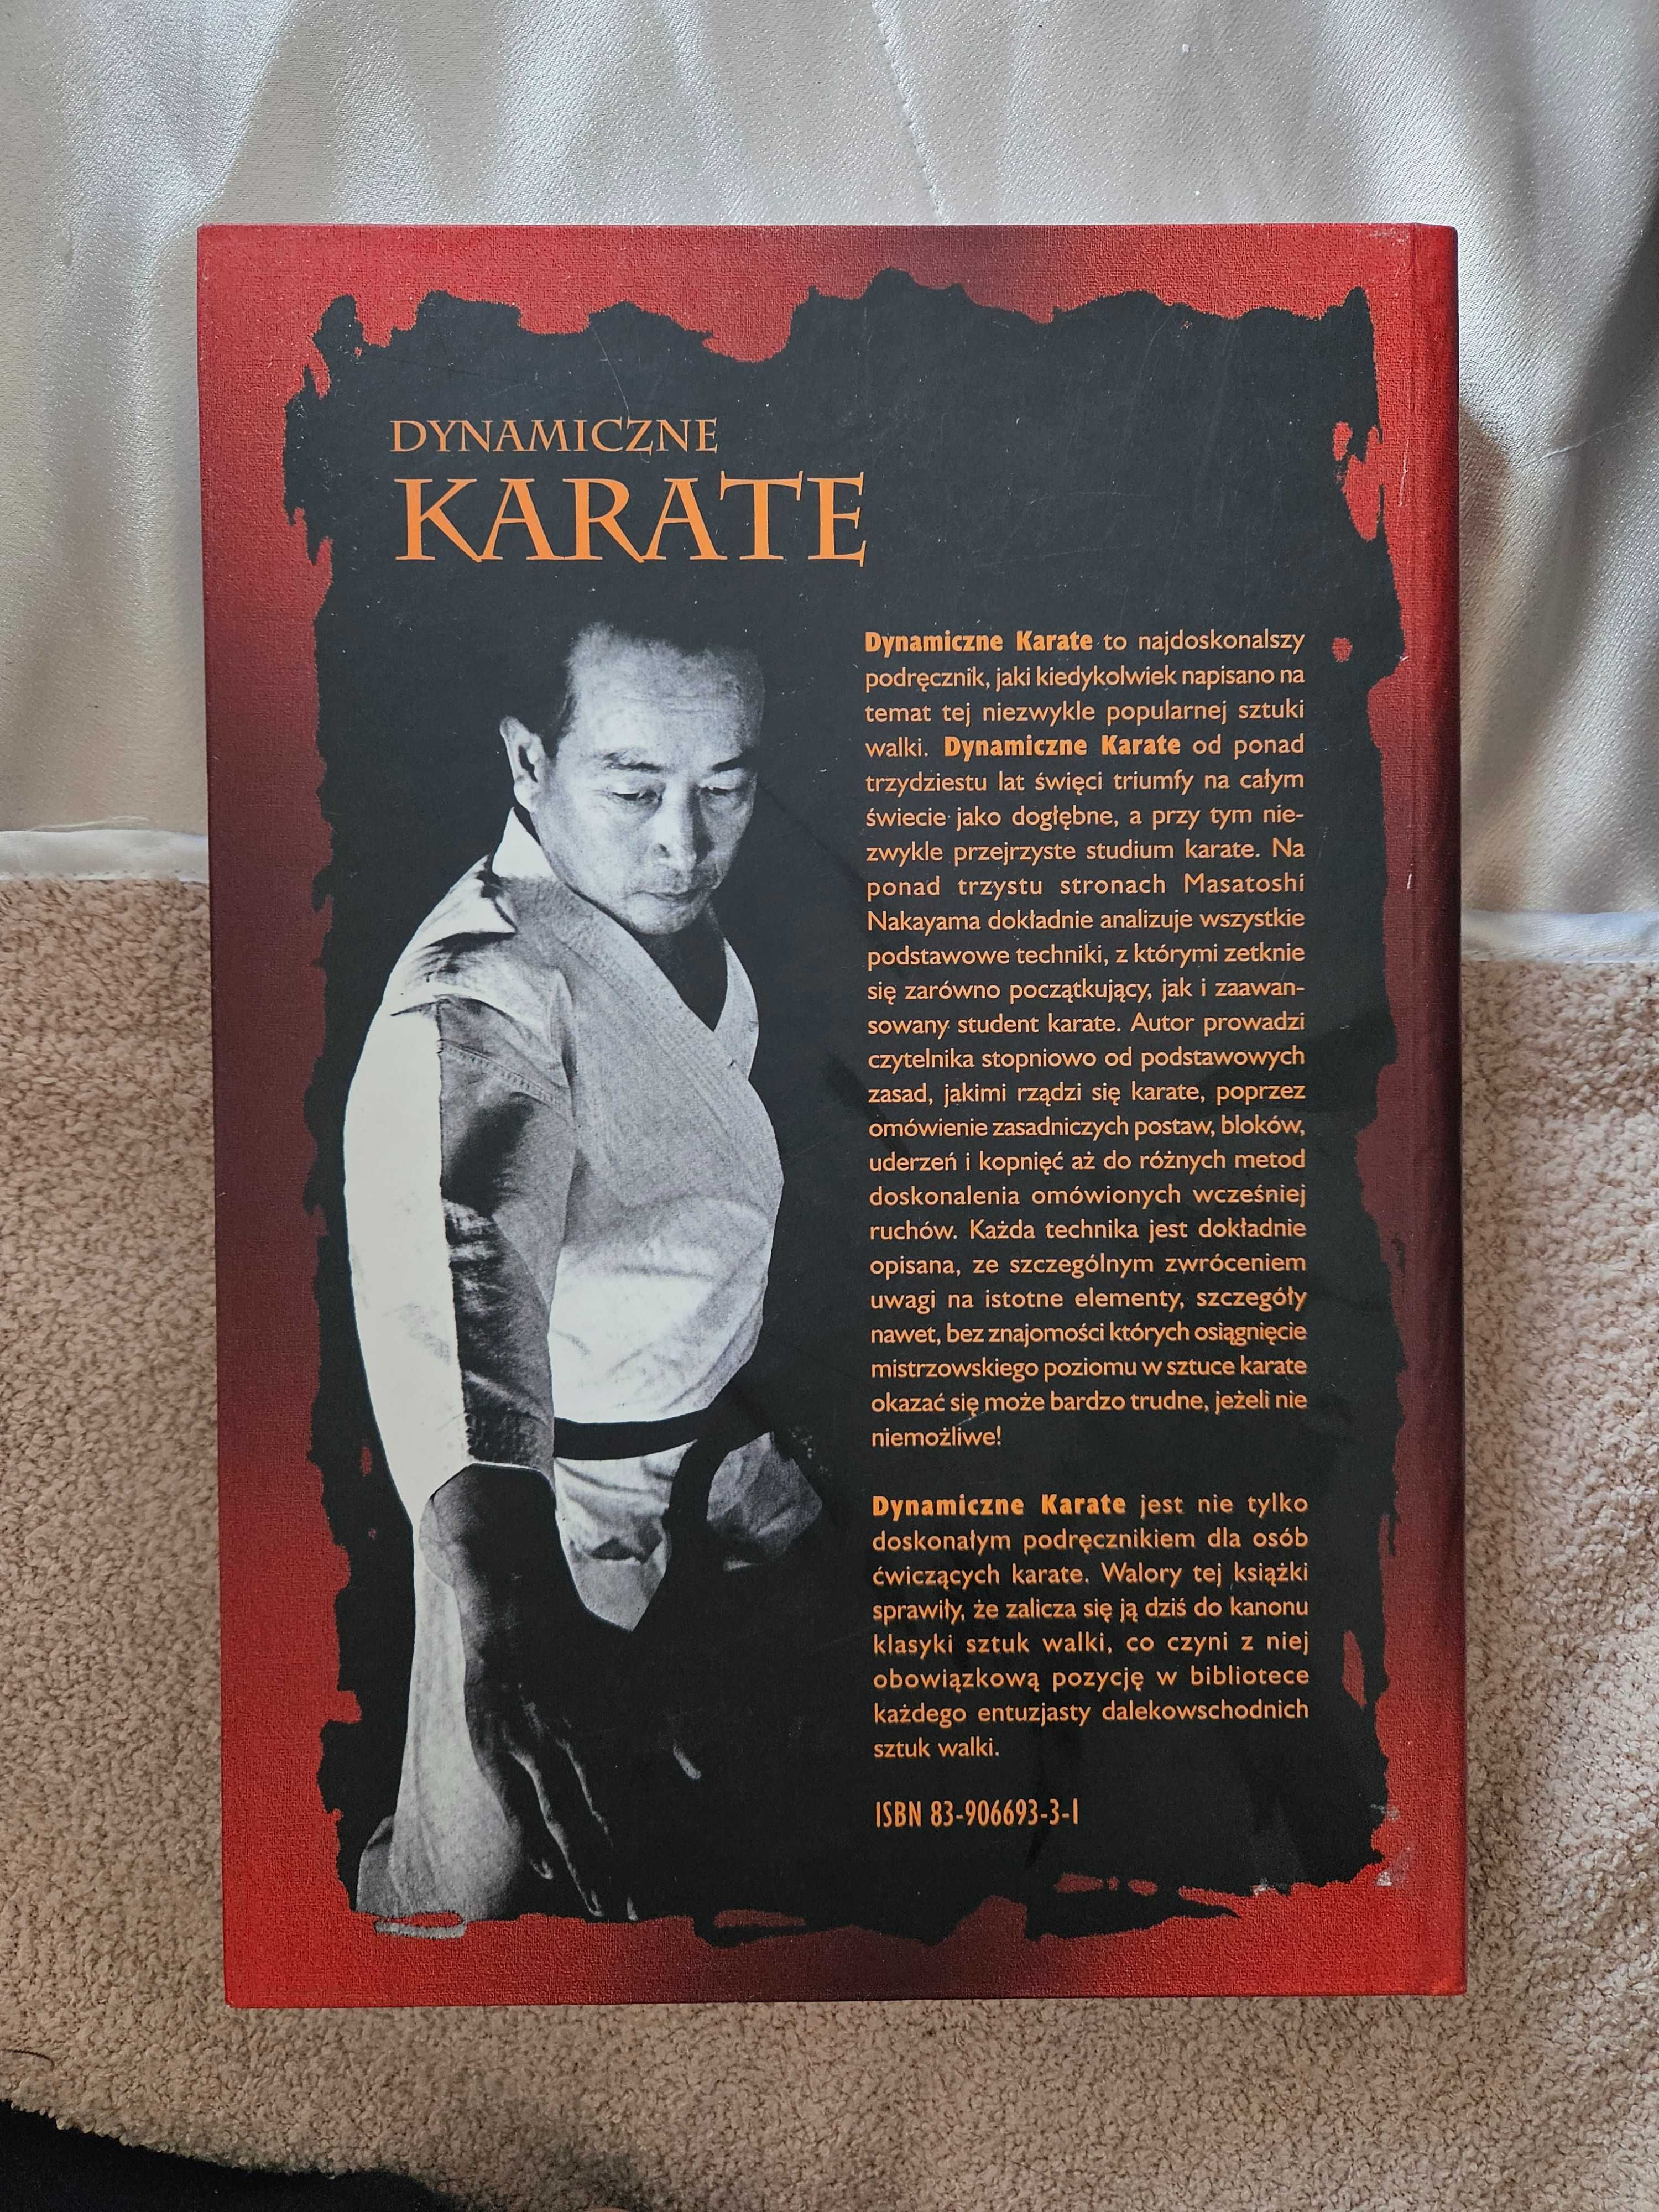 Książka Masatoshi Nakayama Dynamiczne karate